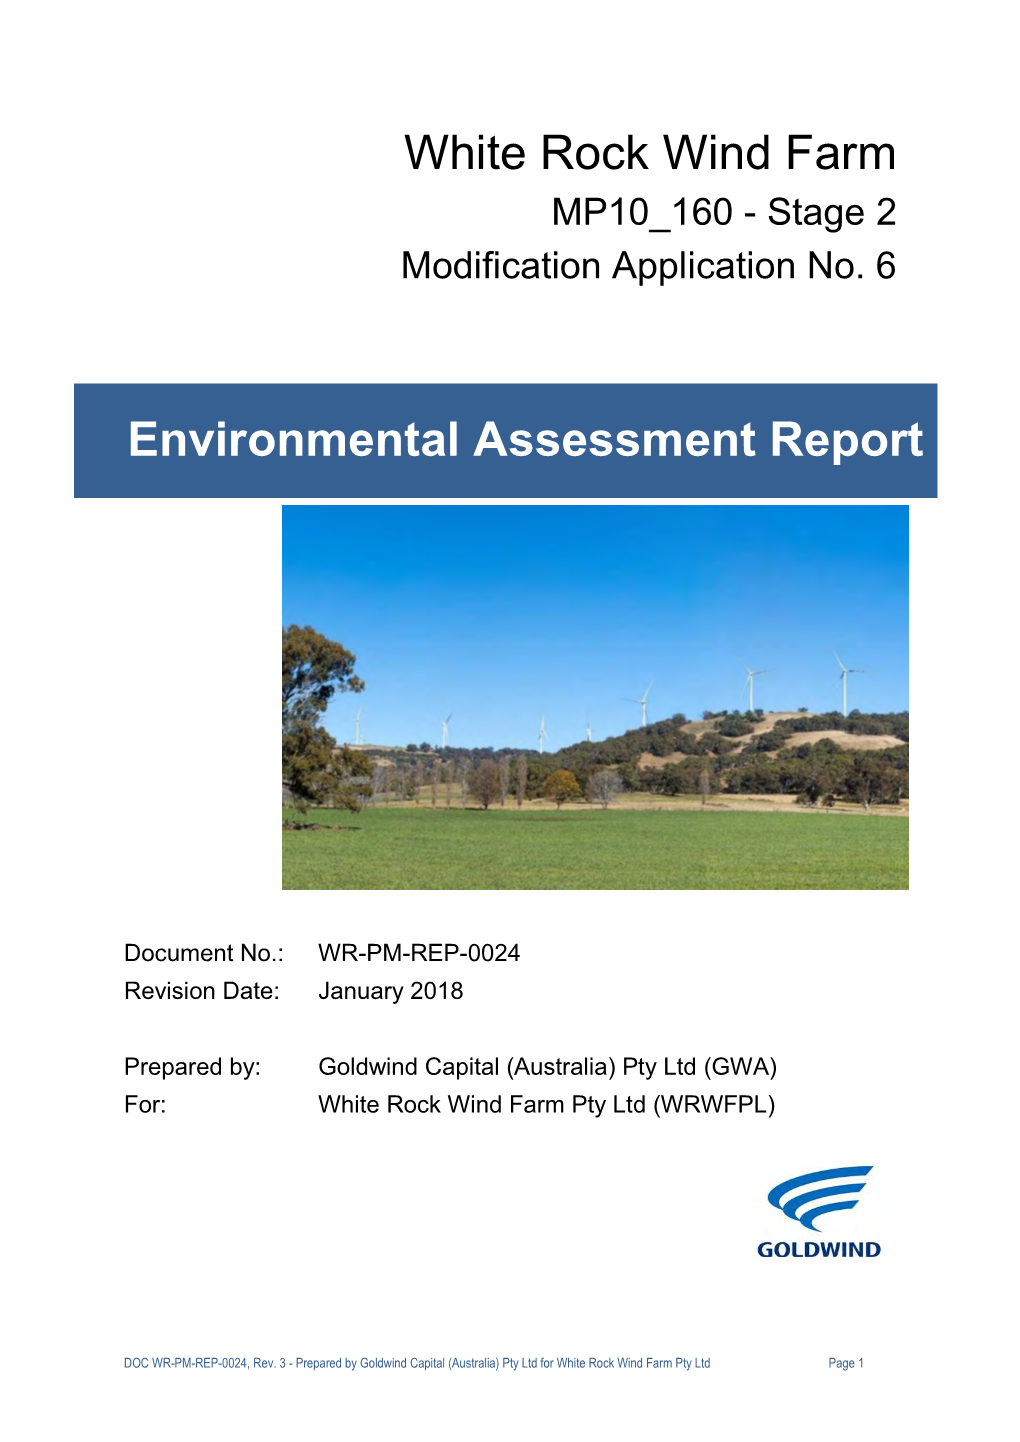 White Rock Wind Farm Environmental Assessment Report